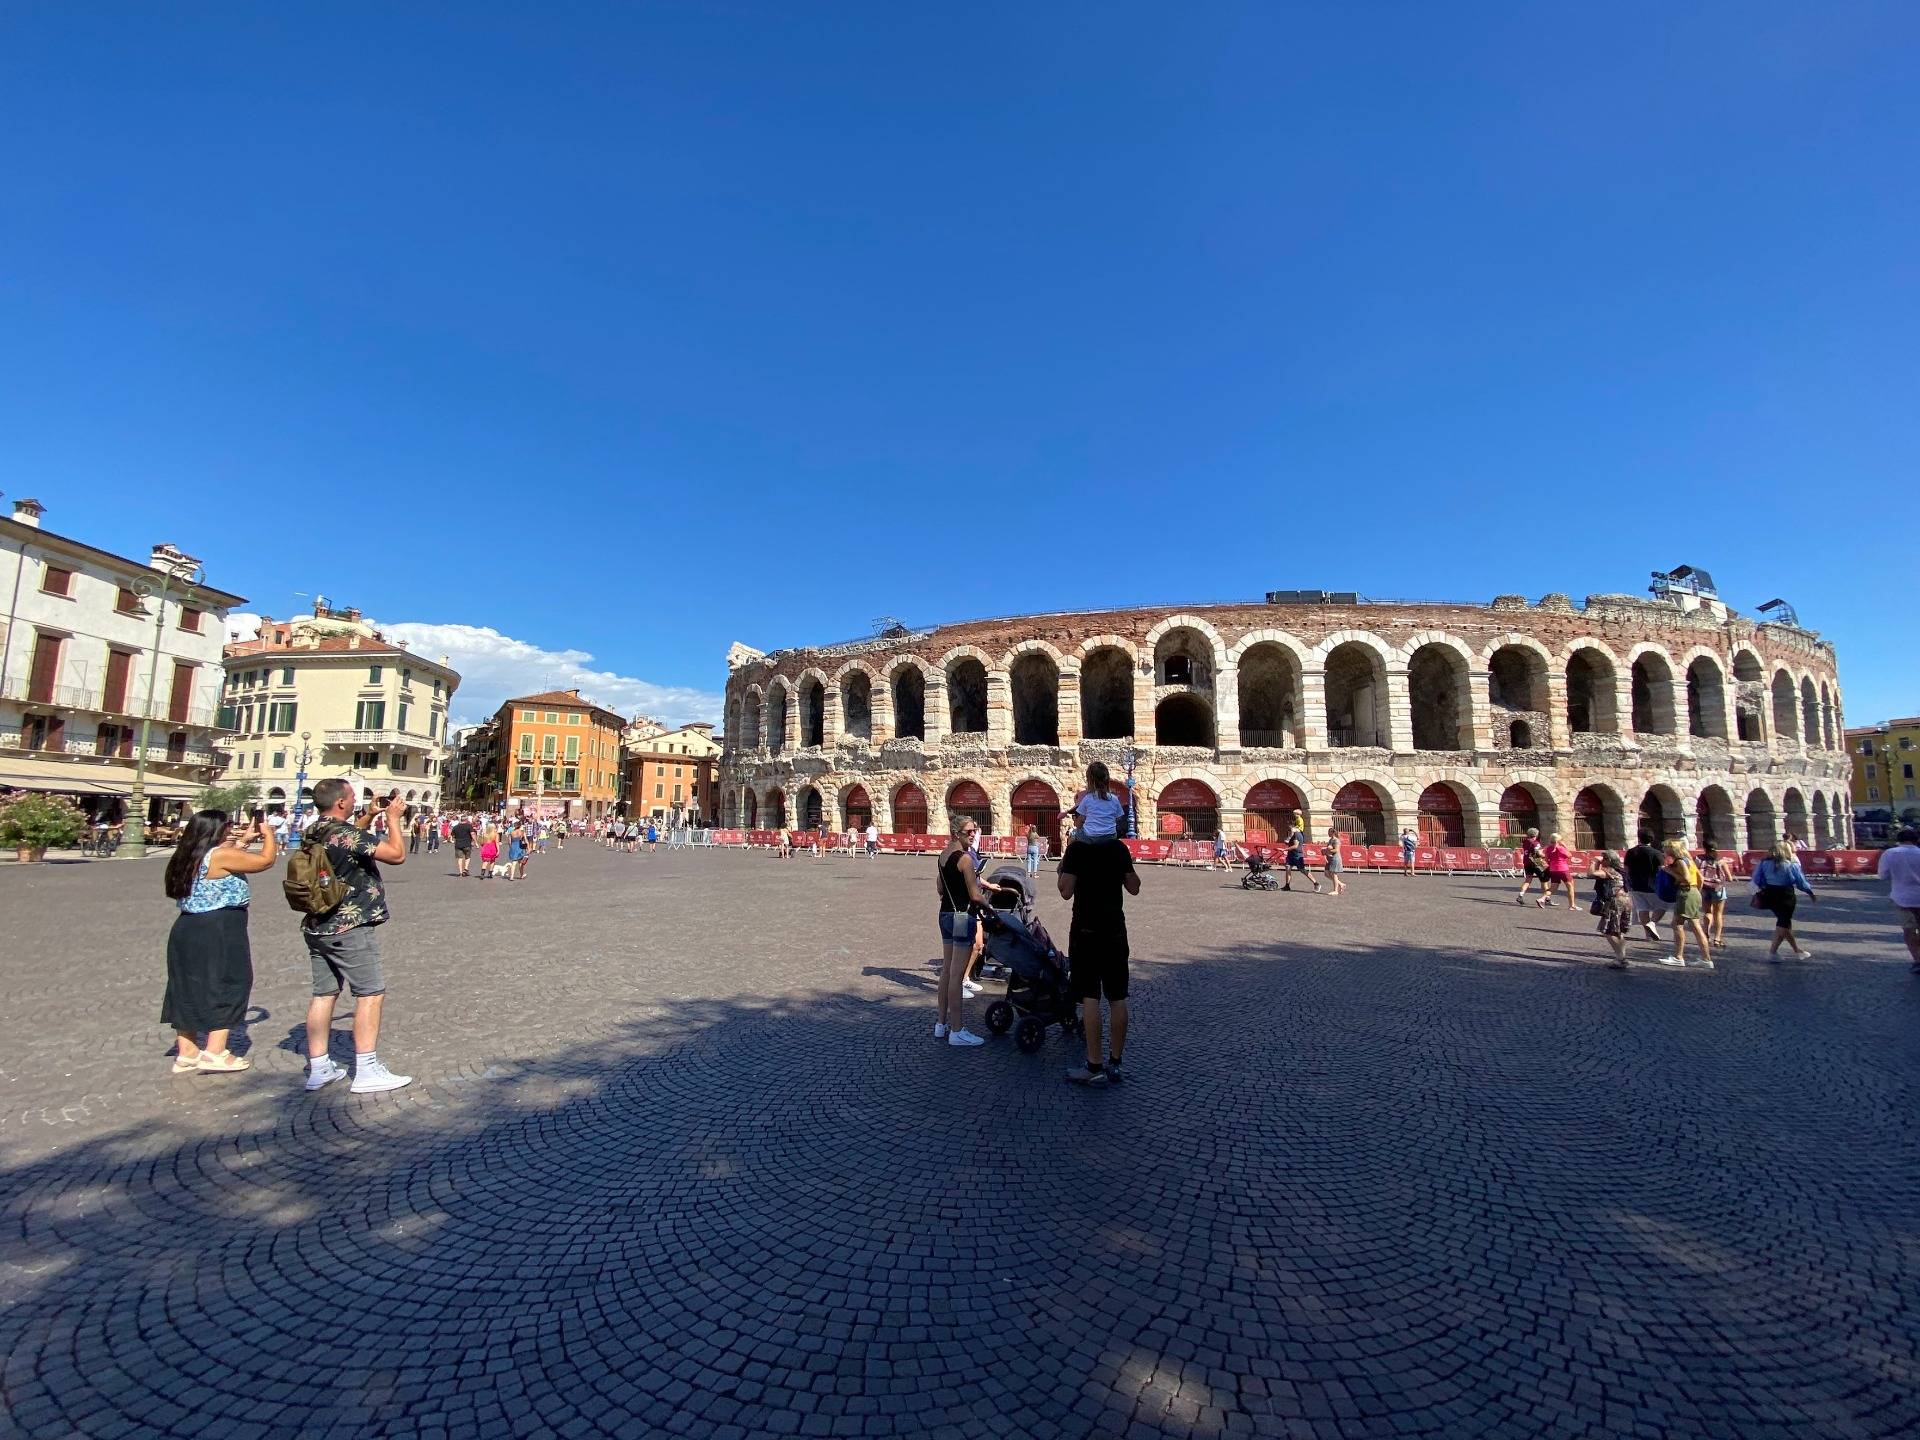 Arena di Verona, a roman amphitheater hosting operas